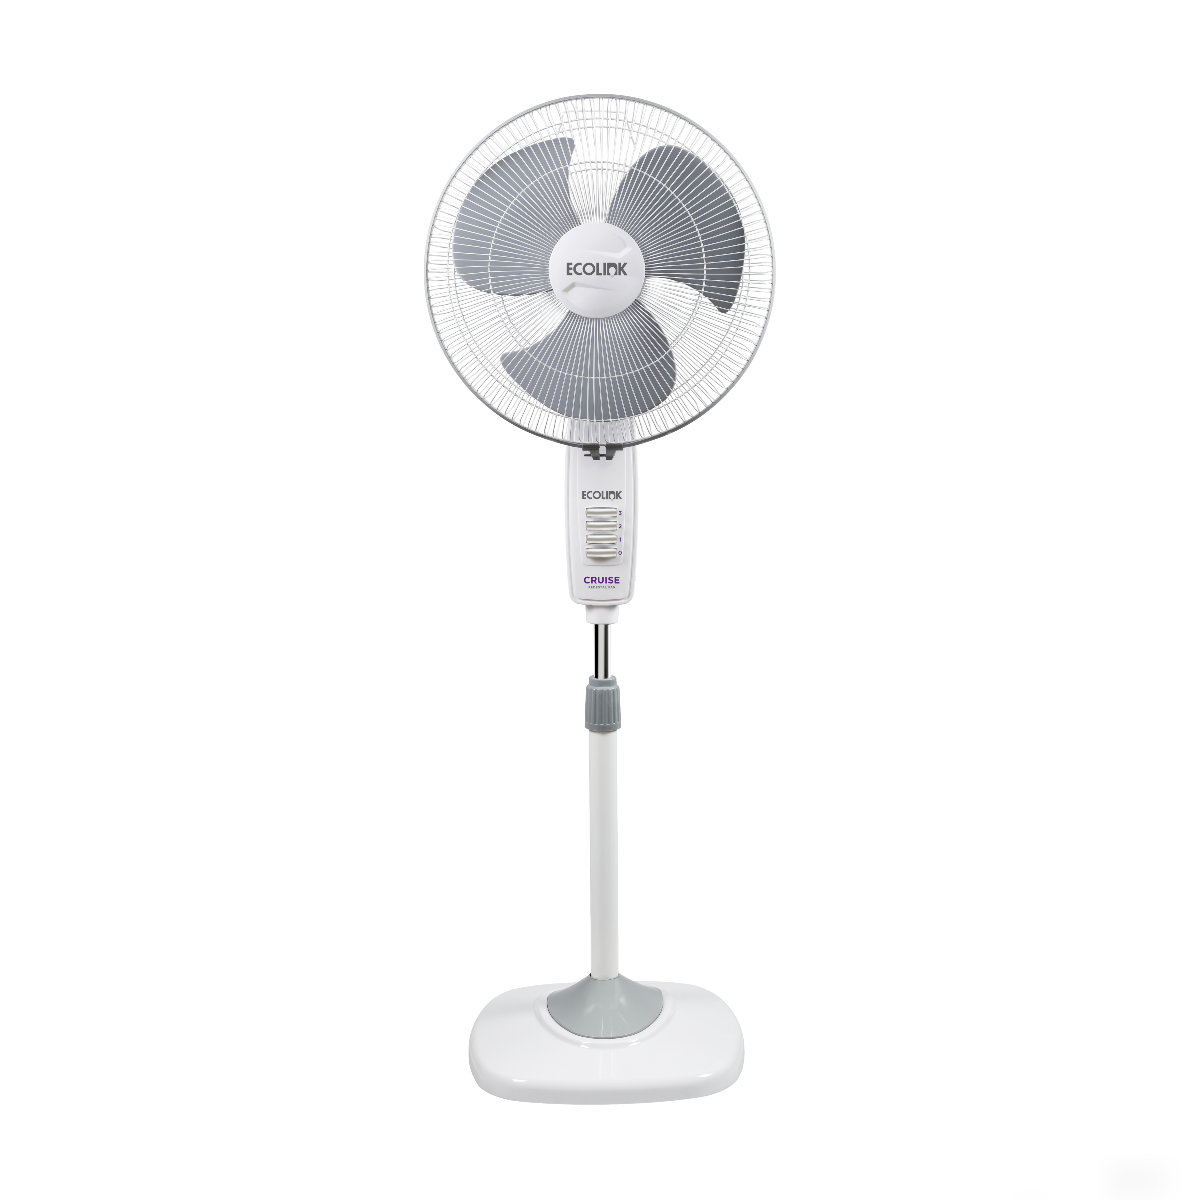 EcoLink Cruiser Pedestal fan (400 mm)